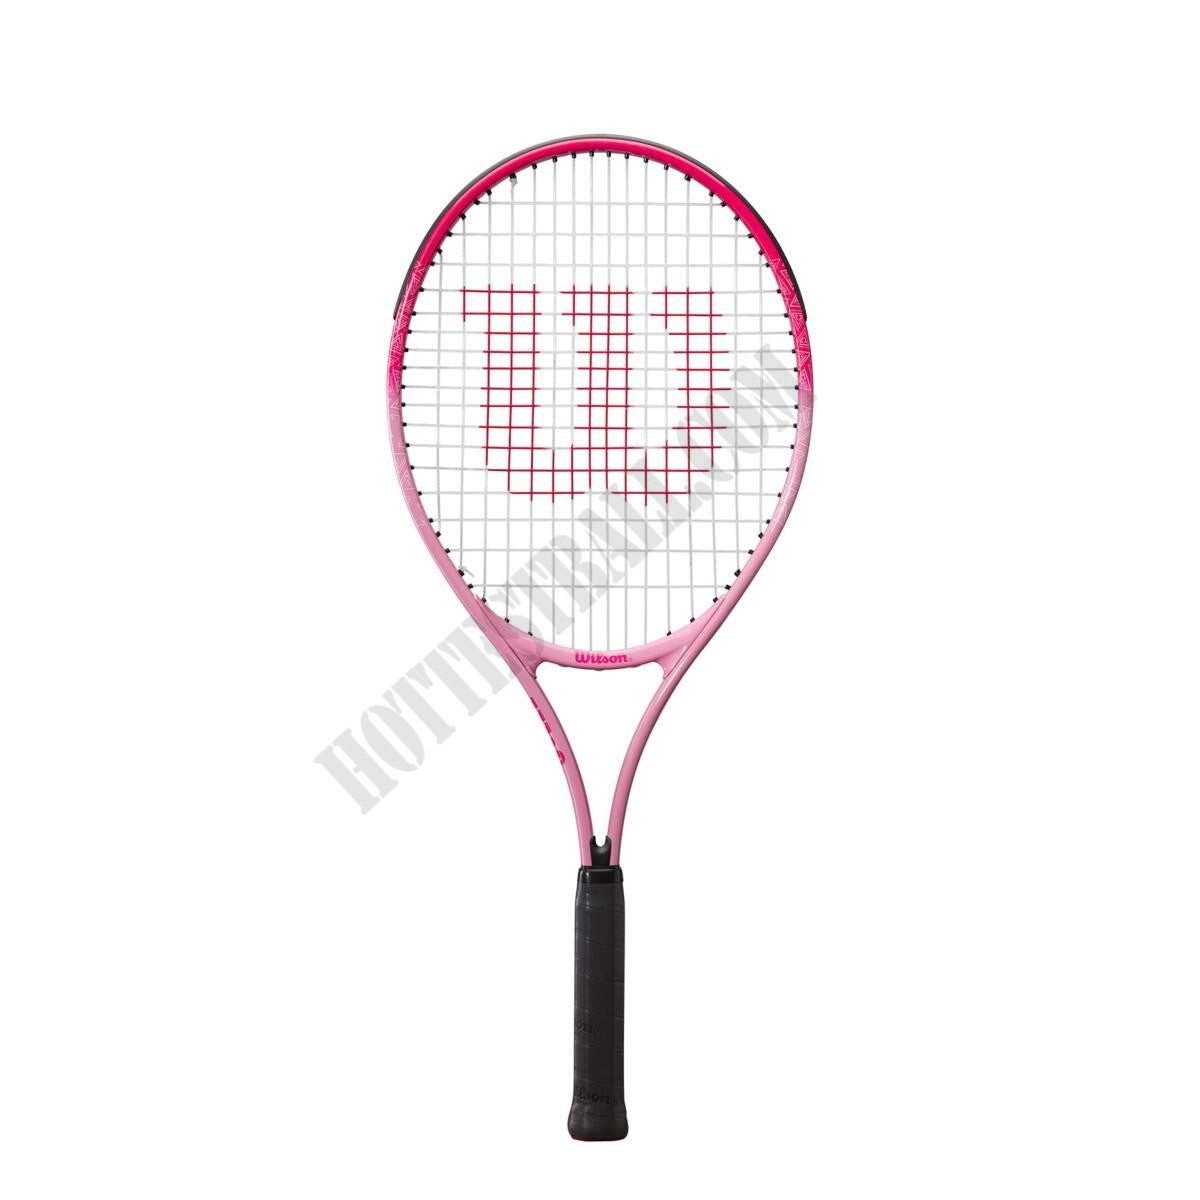 Burn Pink 25 Tennis Racket - Wilson Discount Store - -0